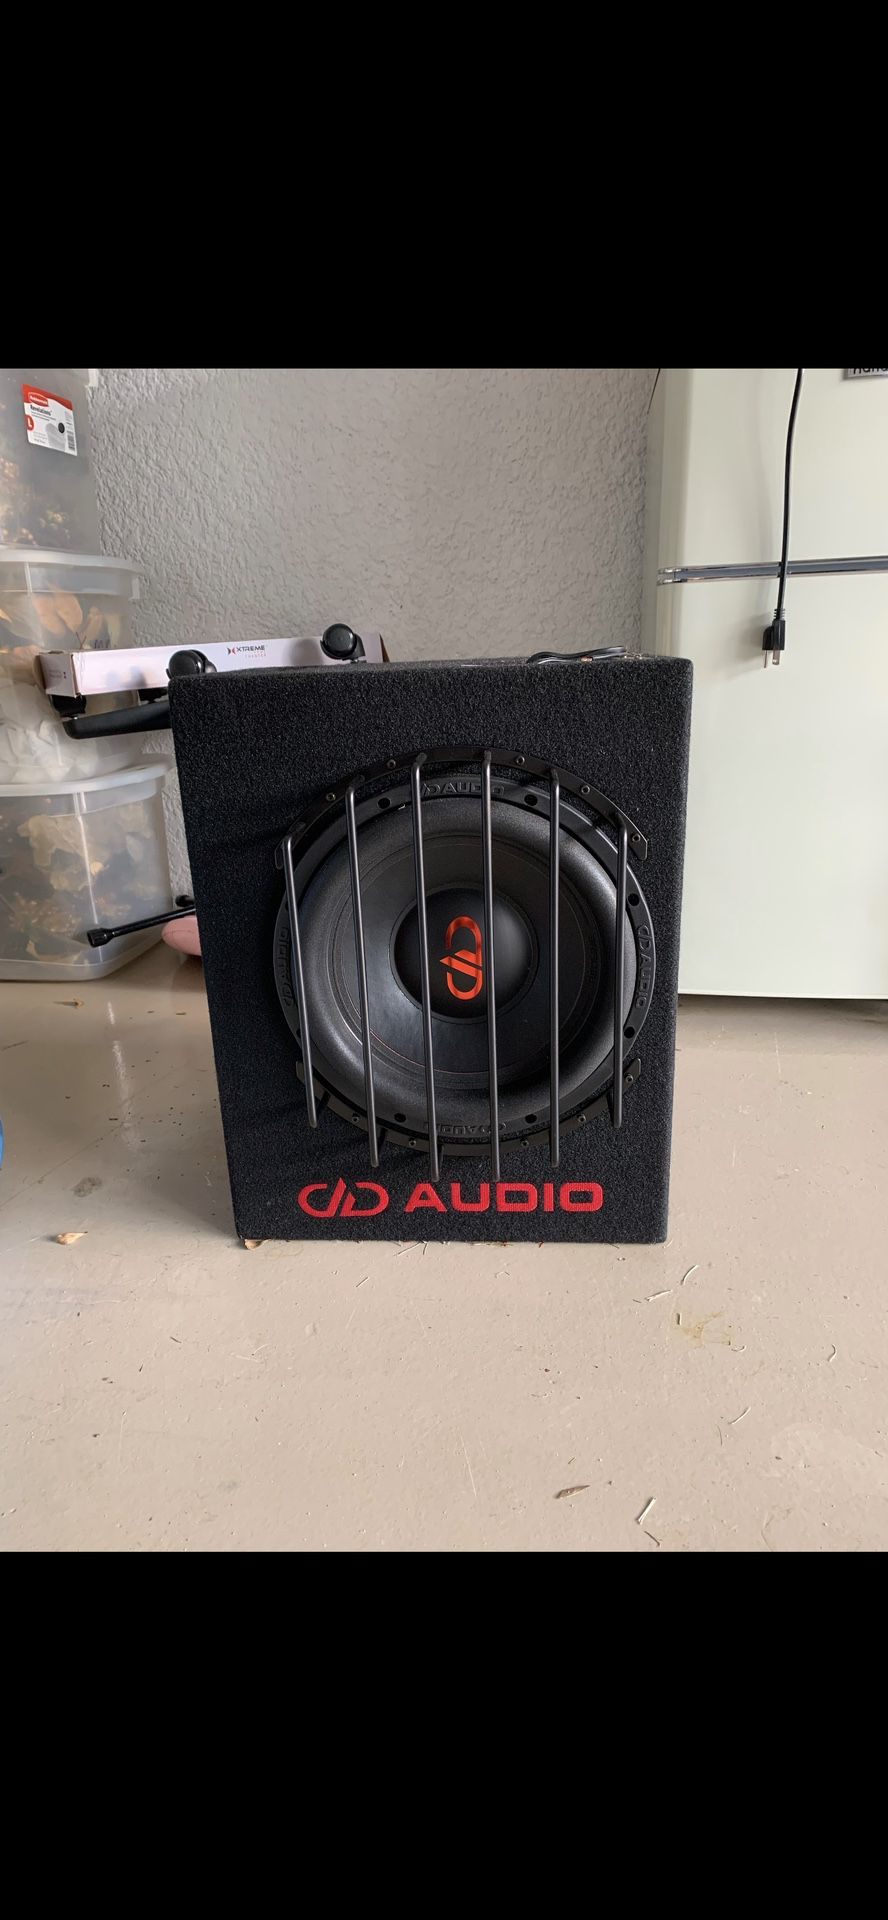 DD AUDIO Amp and Sub kit